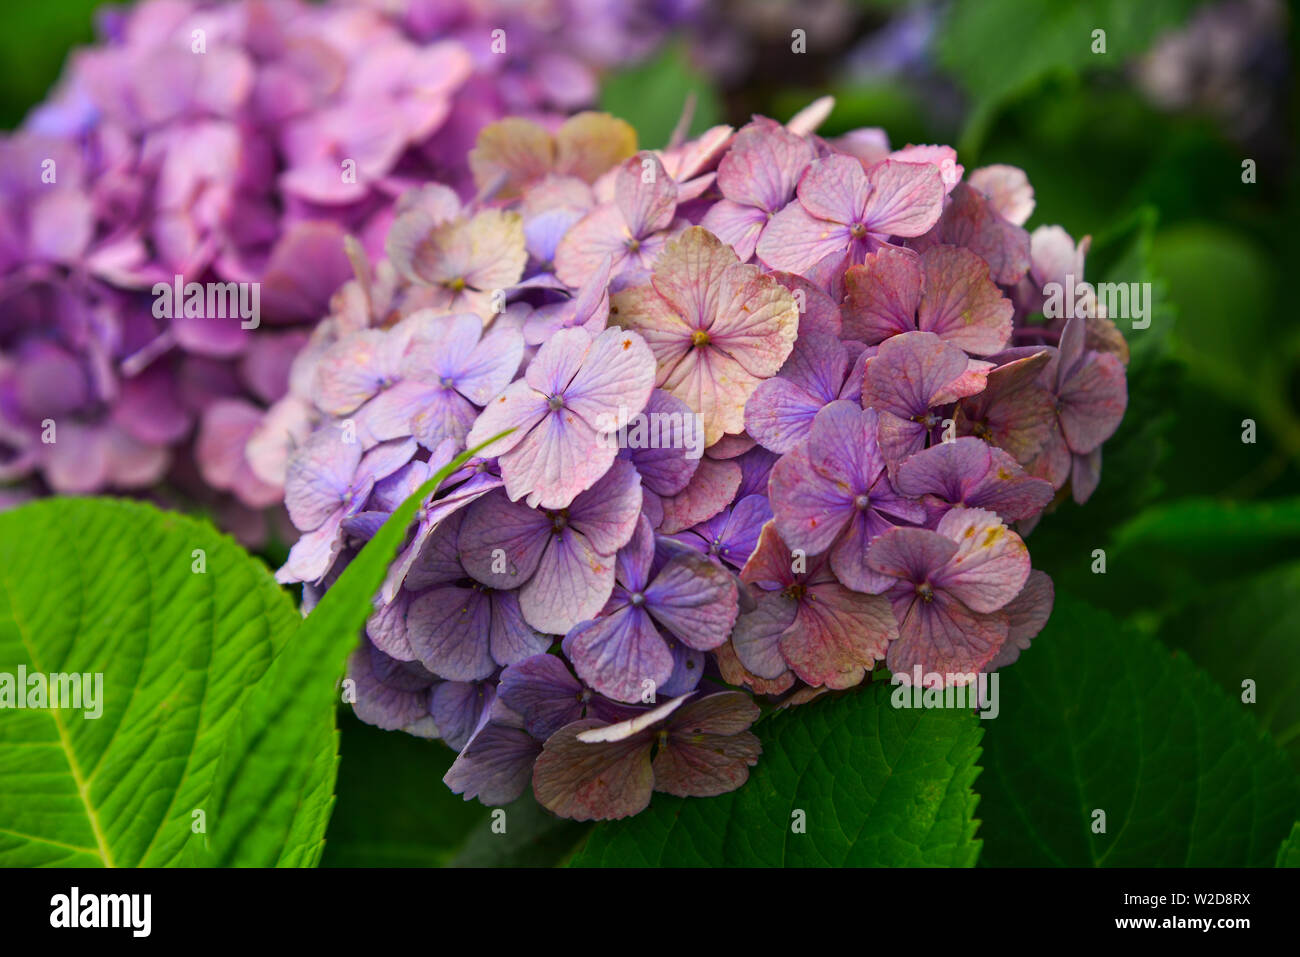 Ajisai Flower Hydrangea Blooming In Spring And Summer At Botanic Garden Stock Photo Alamy